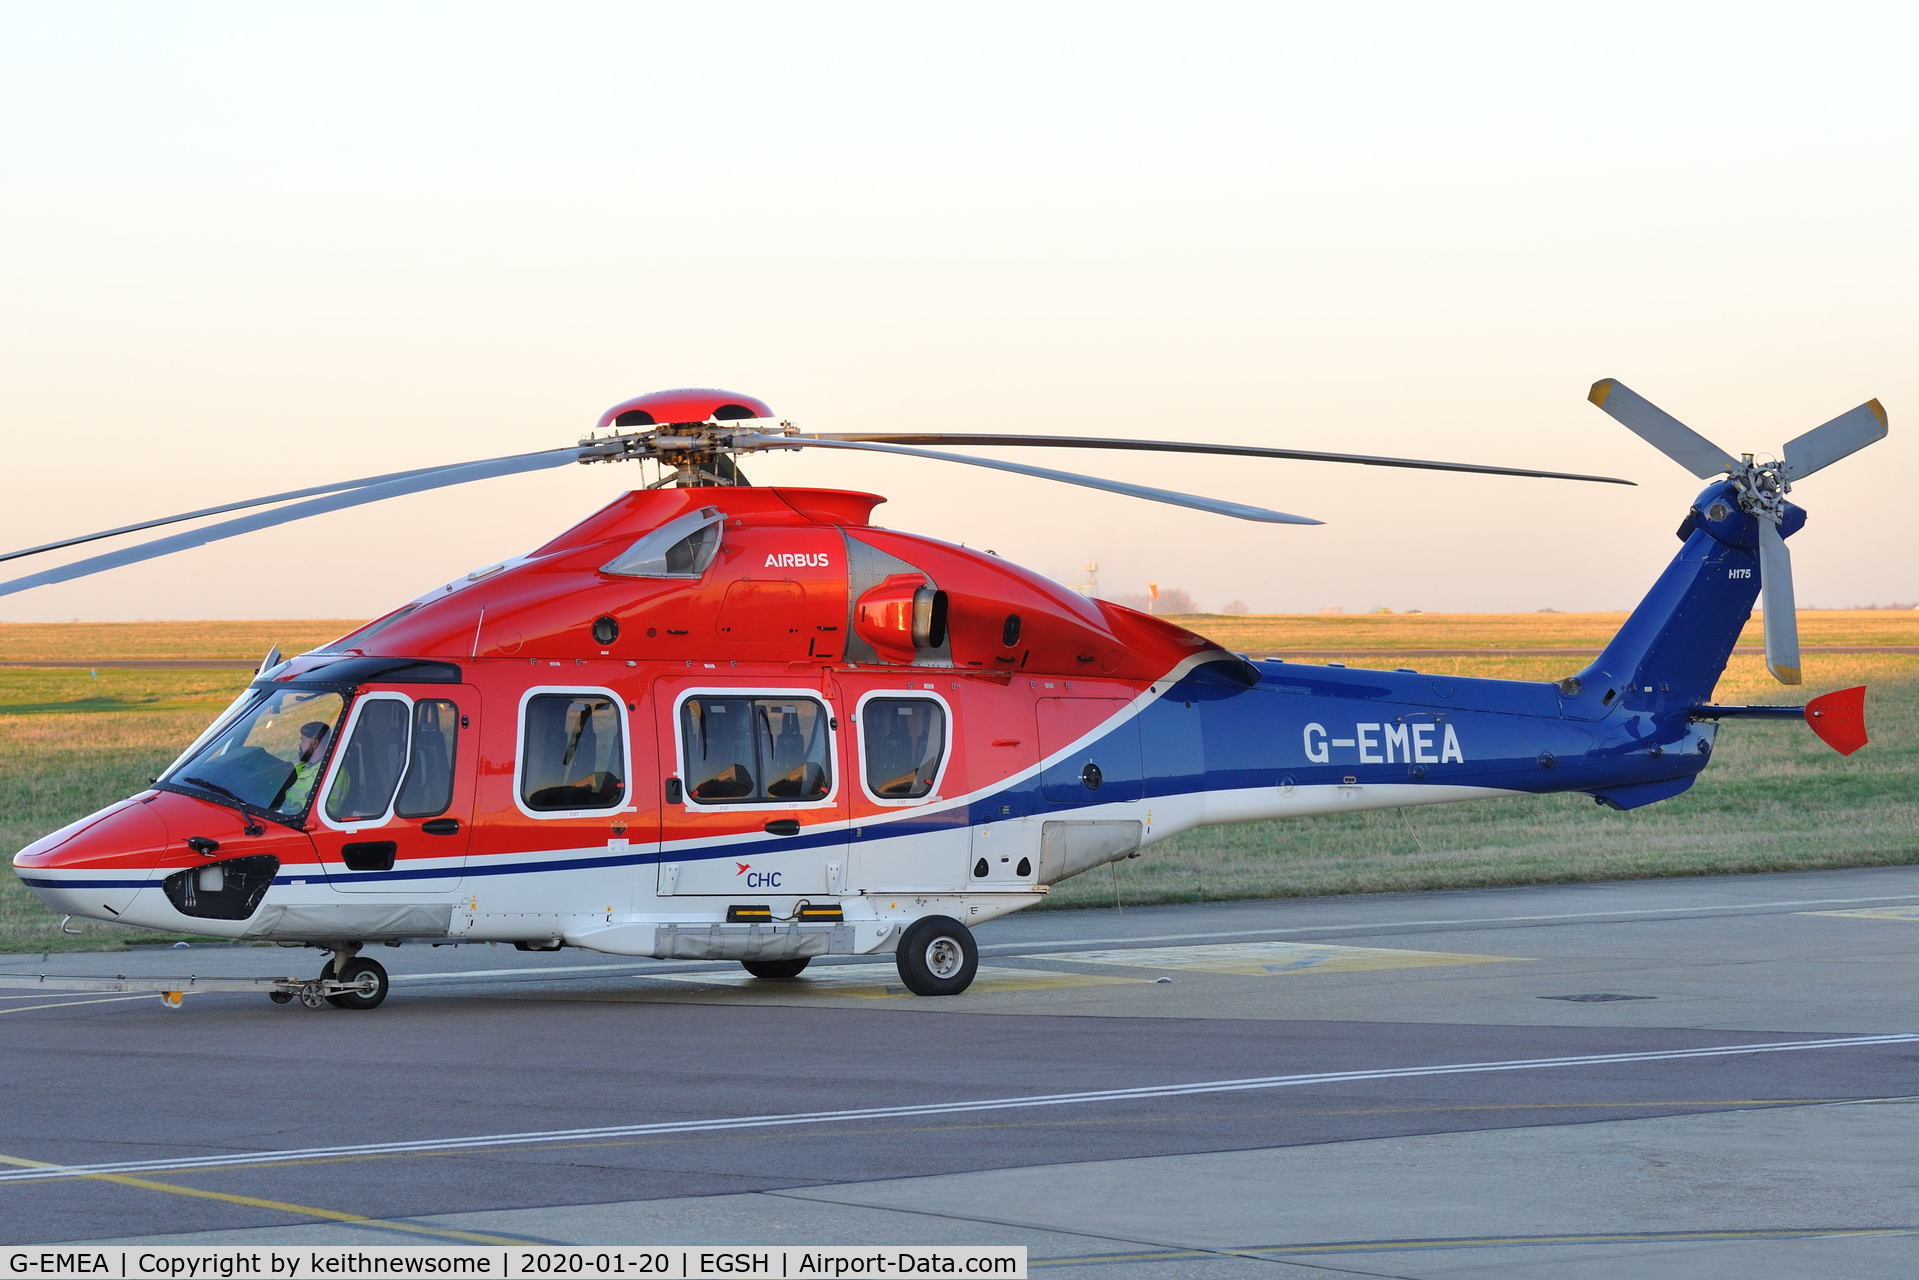 G-EMEA, 2016 Airbus Helicopters EC-175B C/N 5024, Towed to maintenance hangar.